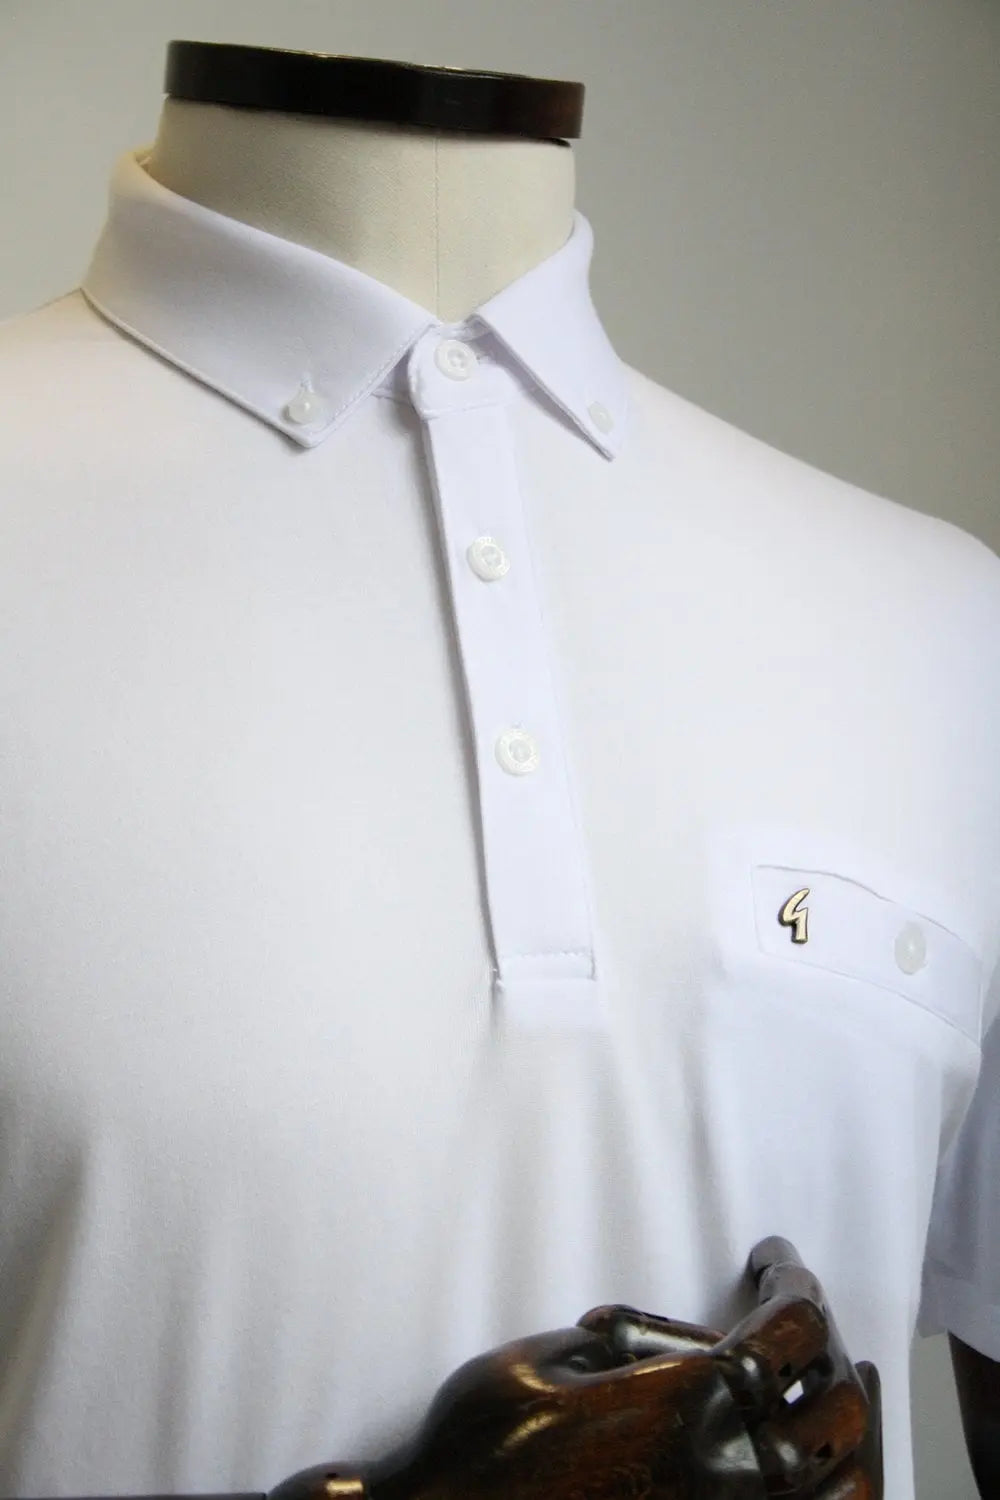 Gabicci Vintage Ladro White Button-Down Collar Polo Shirt From Woven Durham